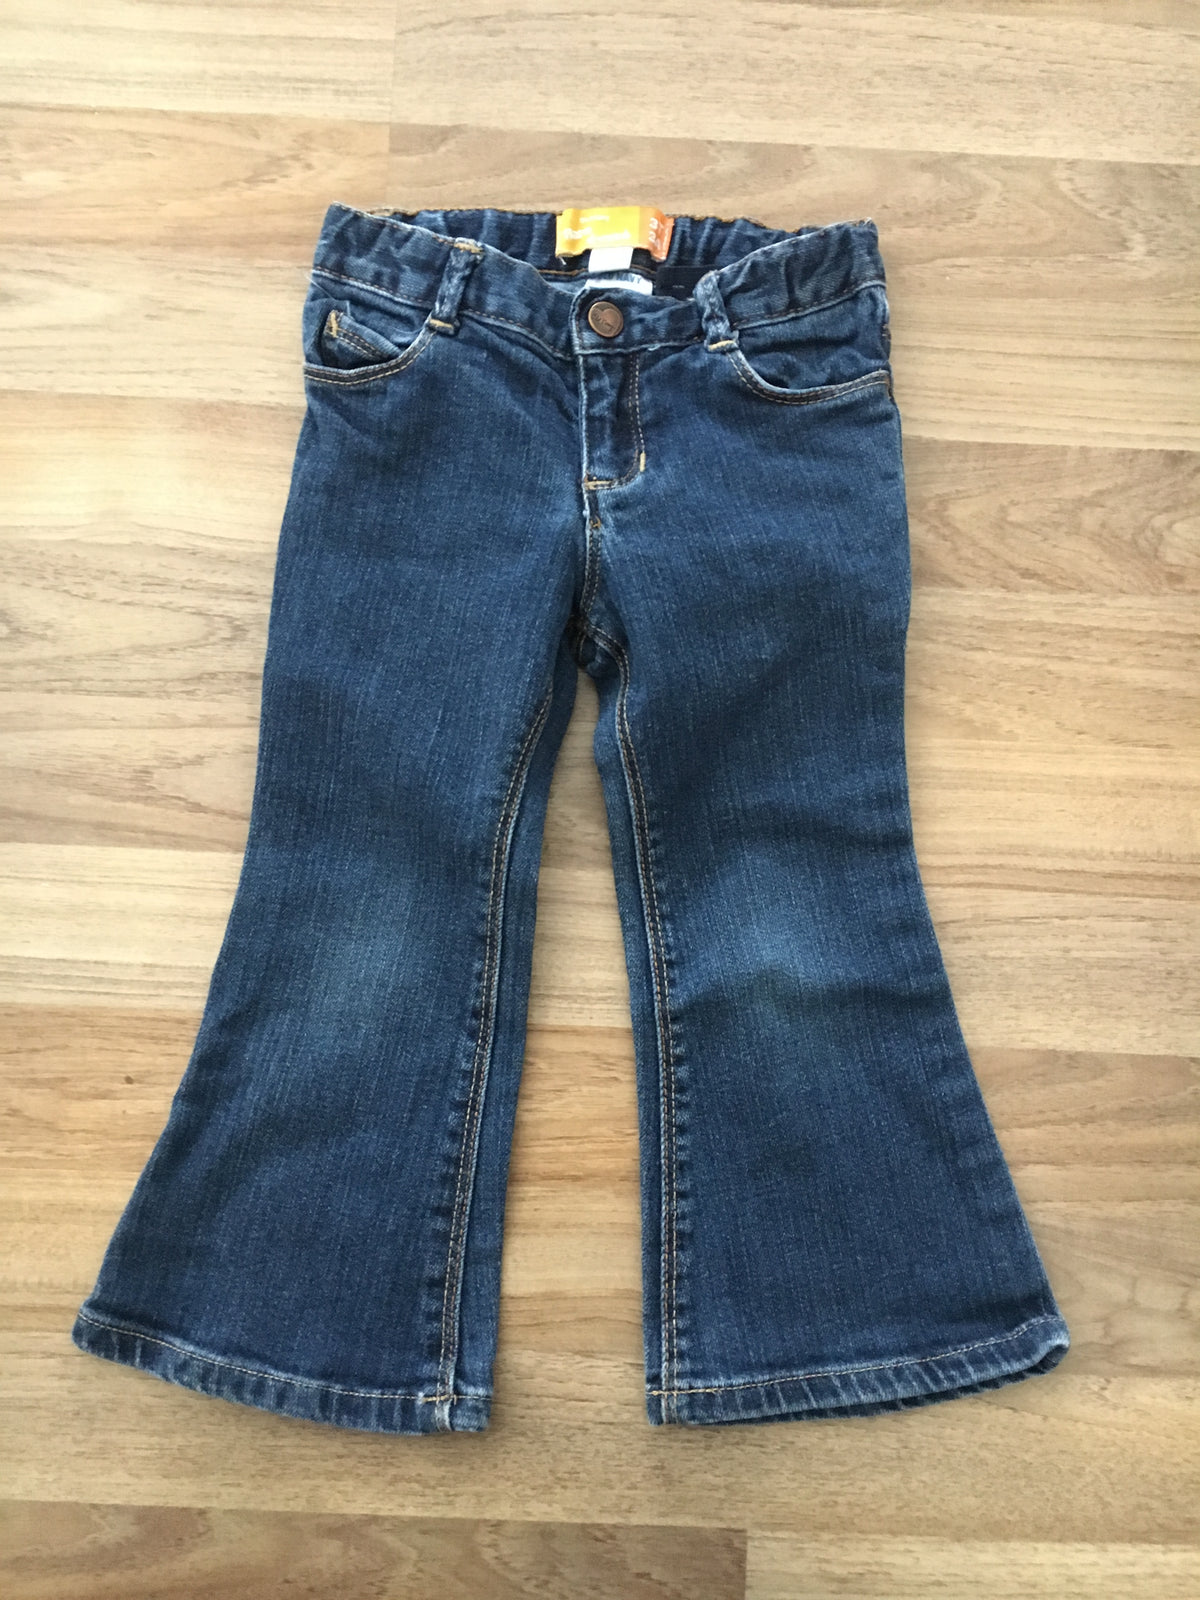 Stretchy Jeans (Girls Size 3)